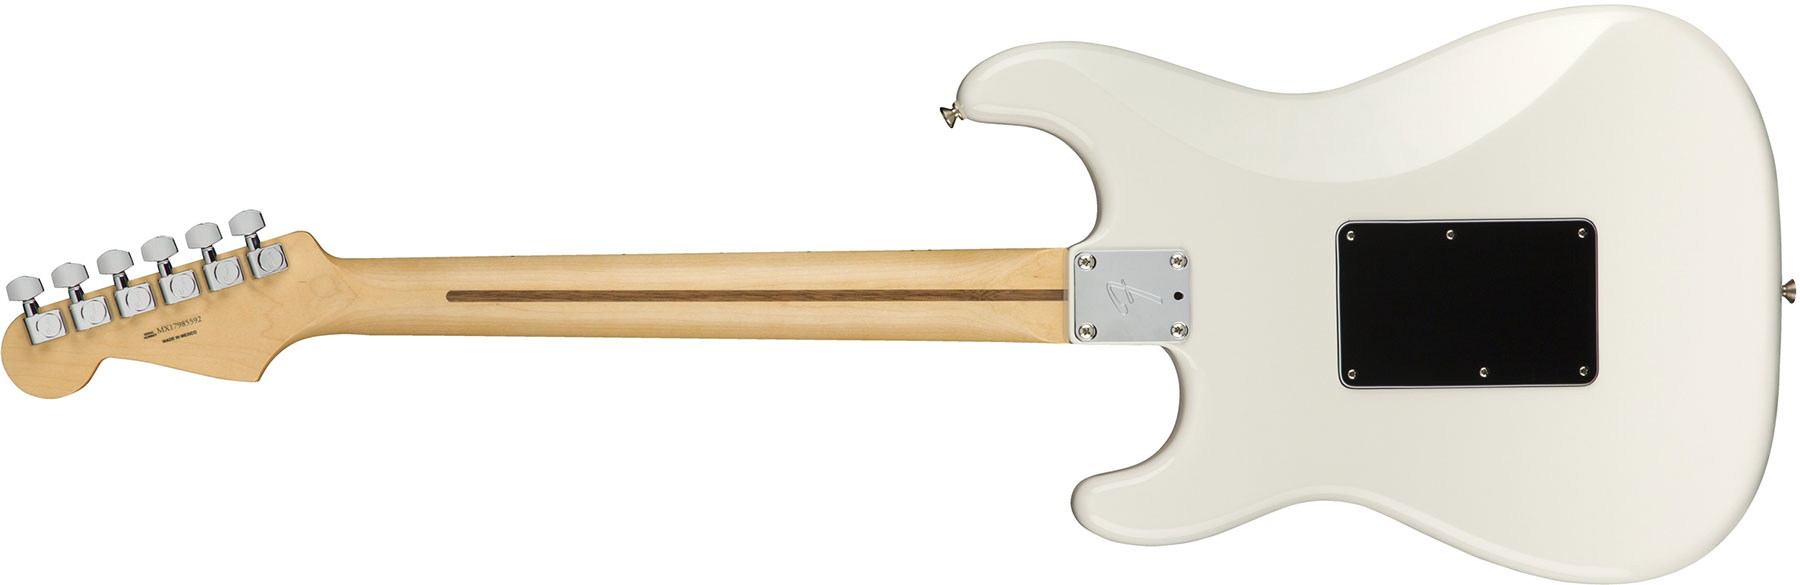 Fender Strat Player Floyd Rose Mex Hss Fr Mn - Polar White - Guitarra eléctrica con forma de str. - Variation 1